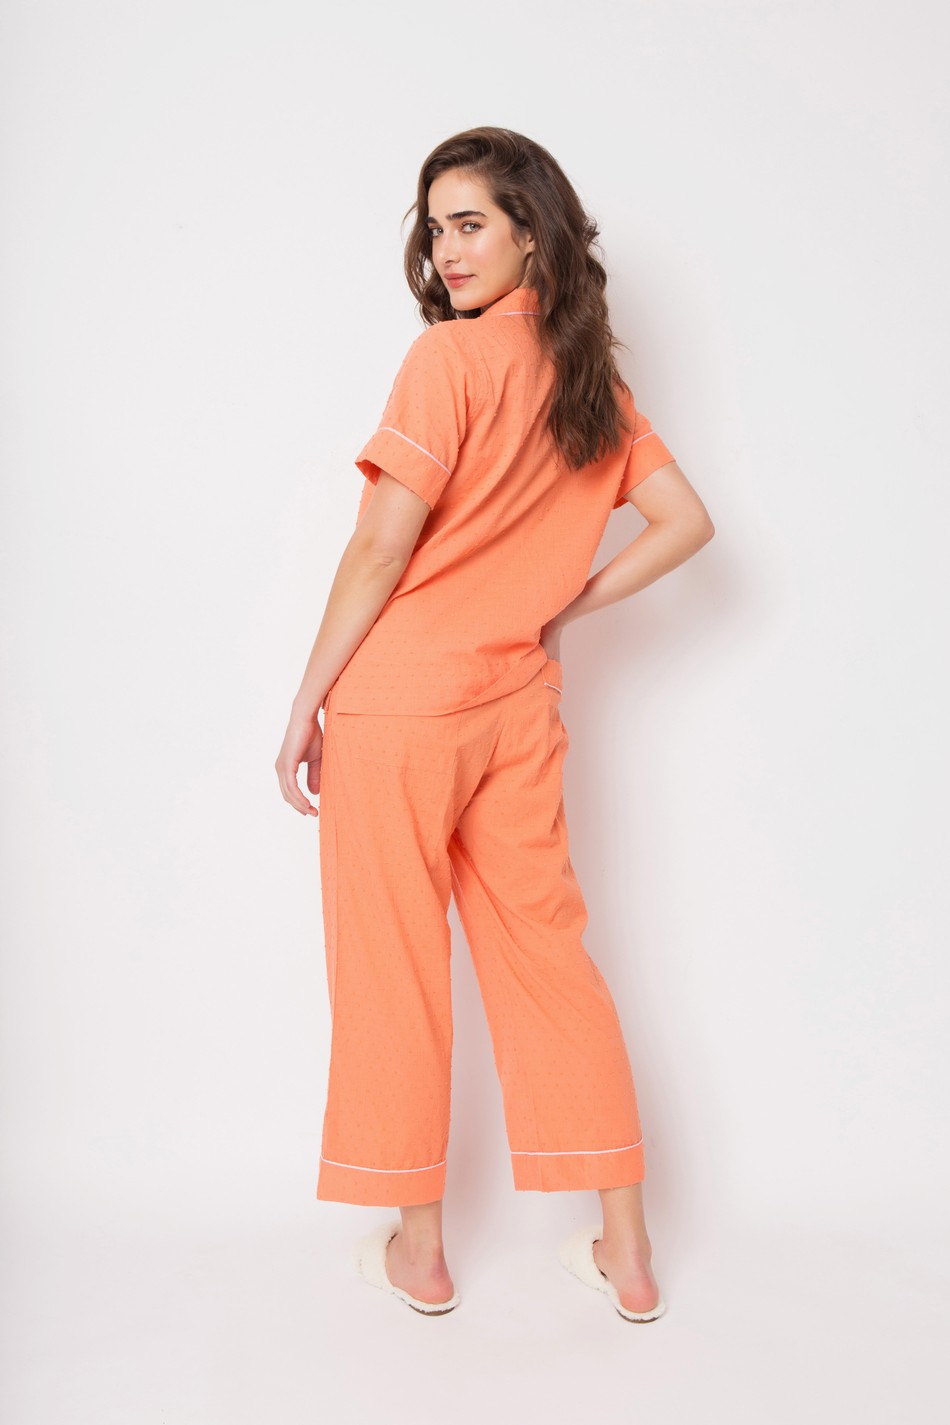 Pijama Delores Papaya - Verão 21